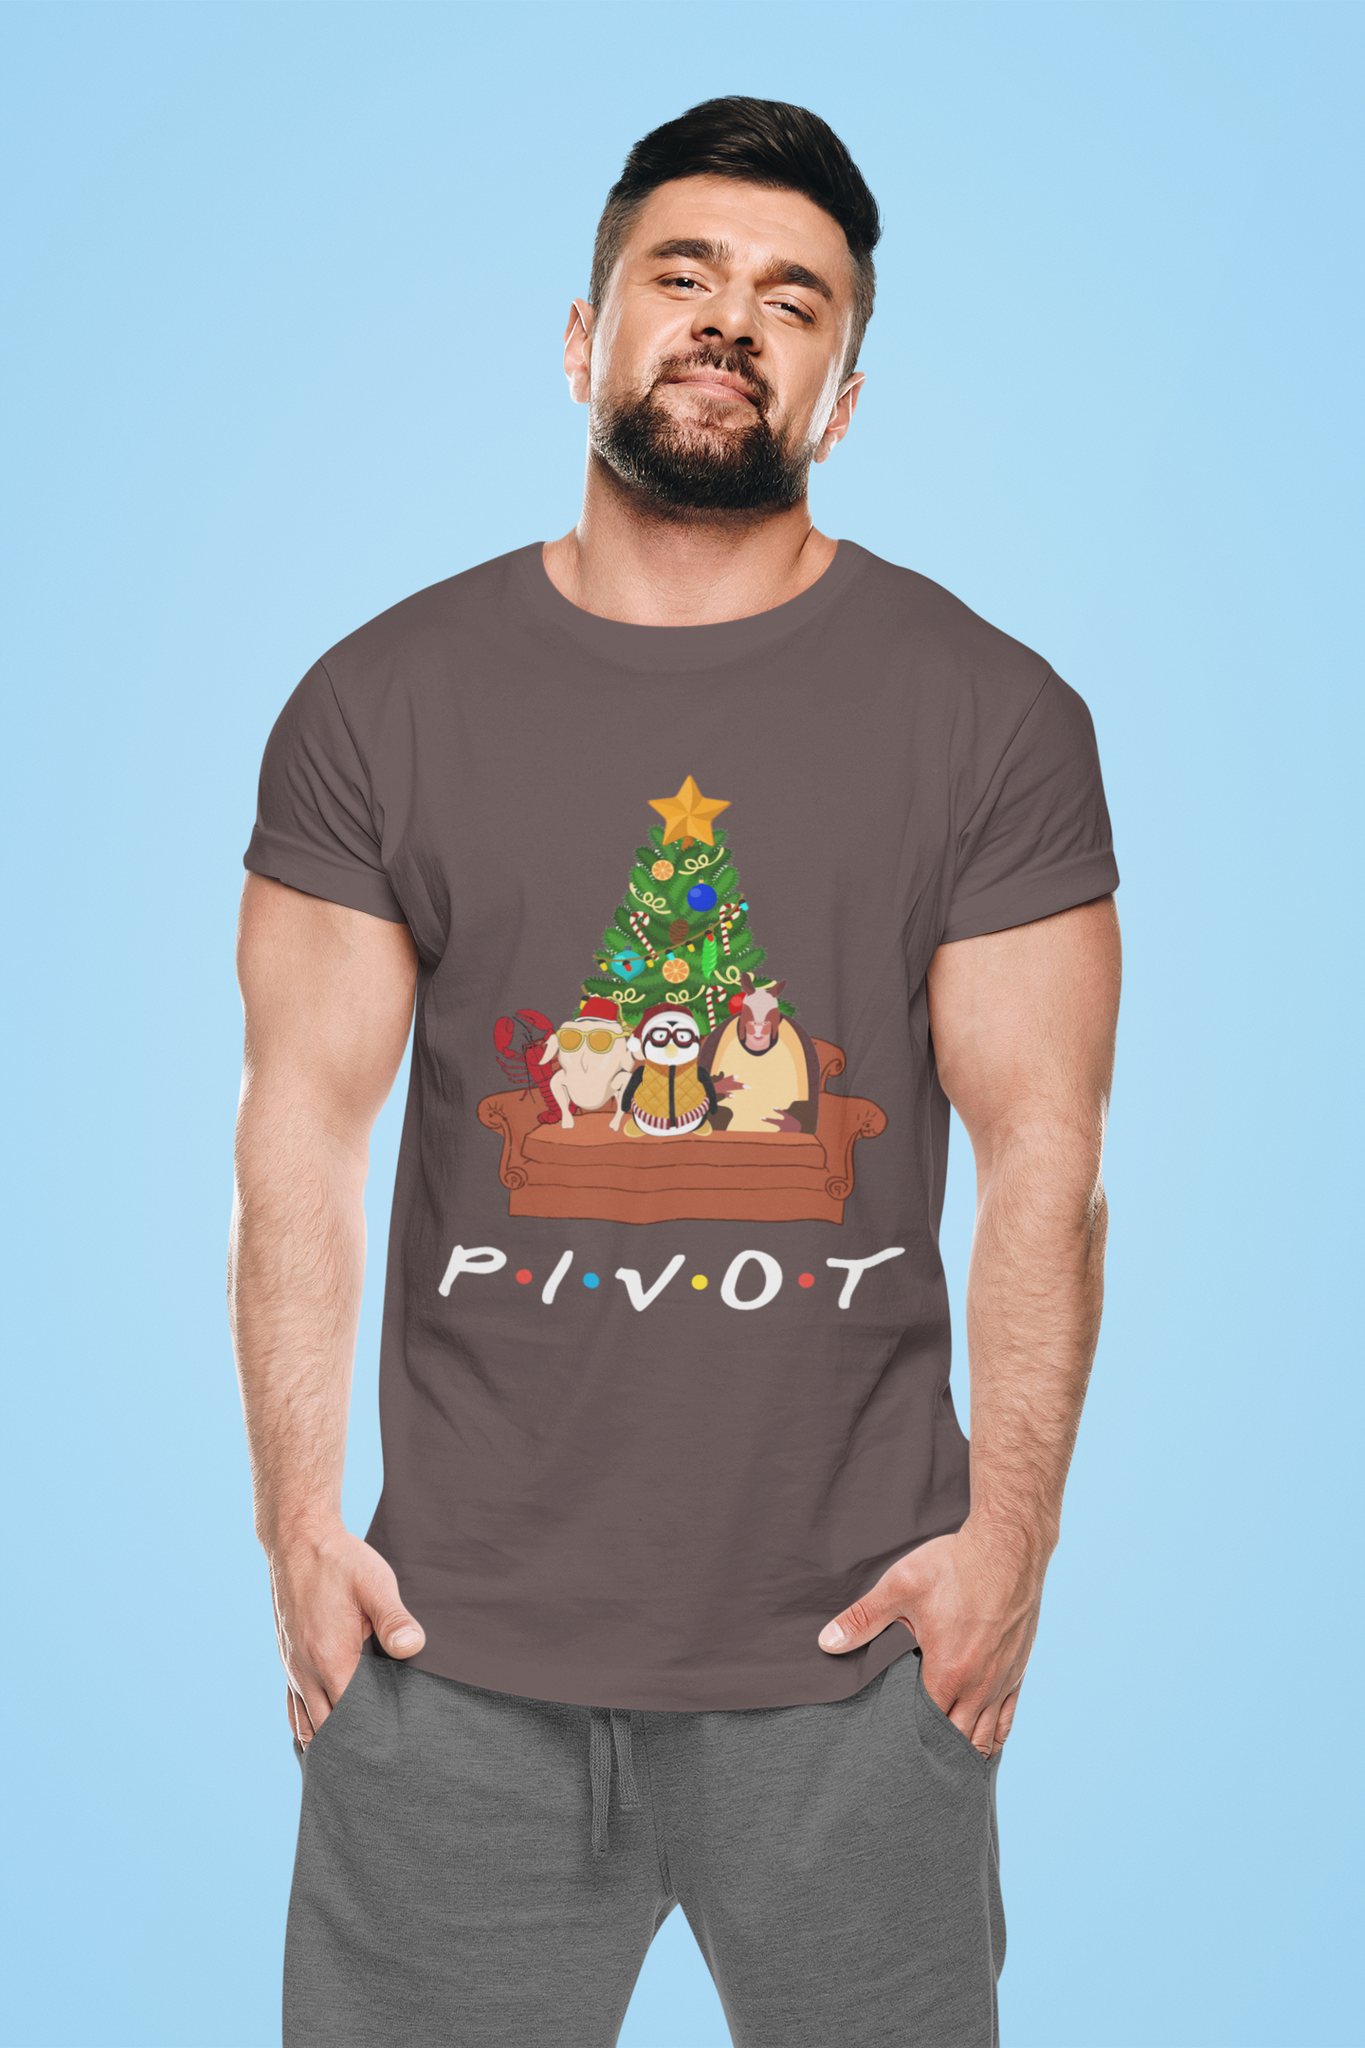 Friends TV Show T Shirt, Friends Costumes T Shirt, Pivot Tshirt, Christmas Gifts